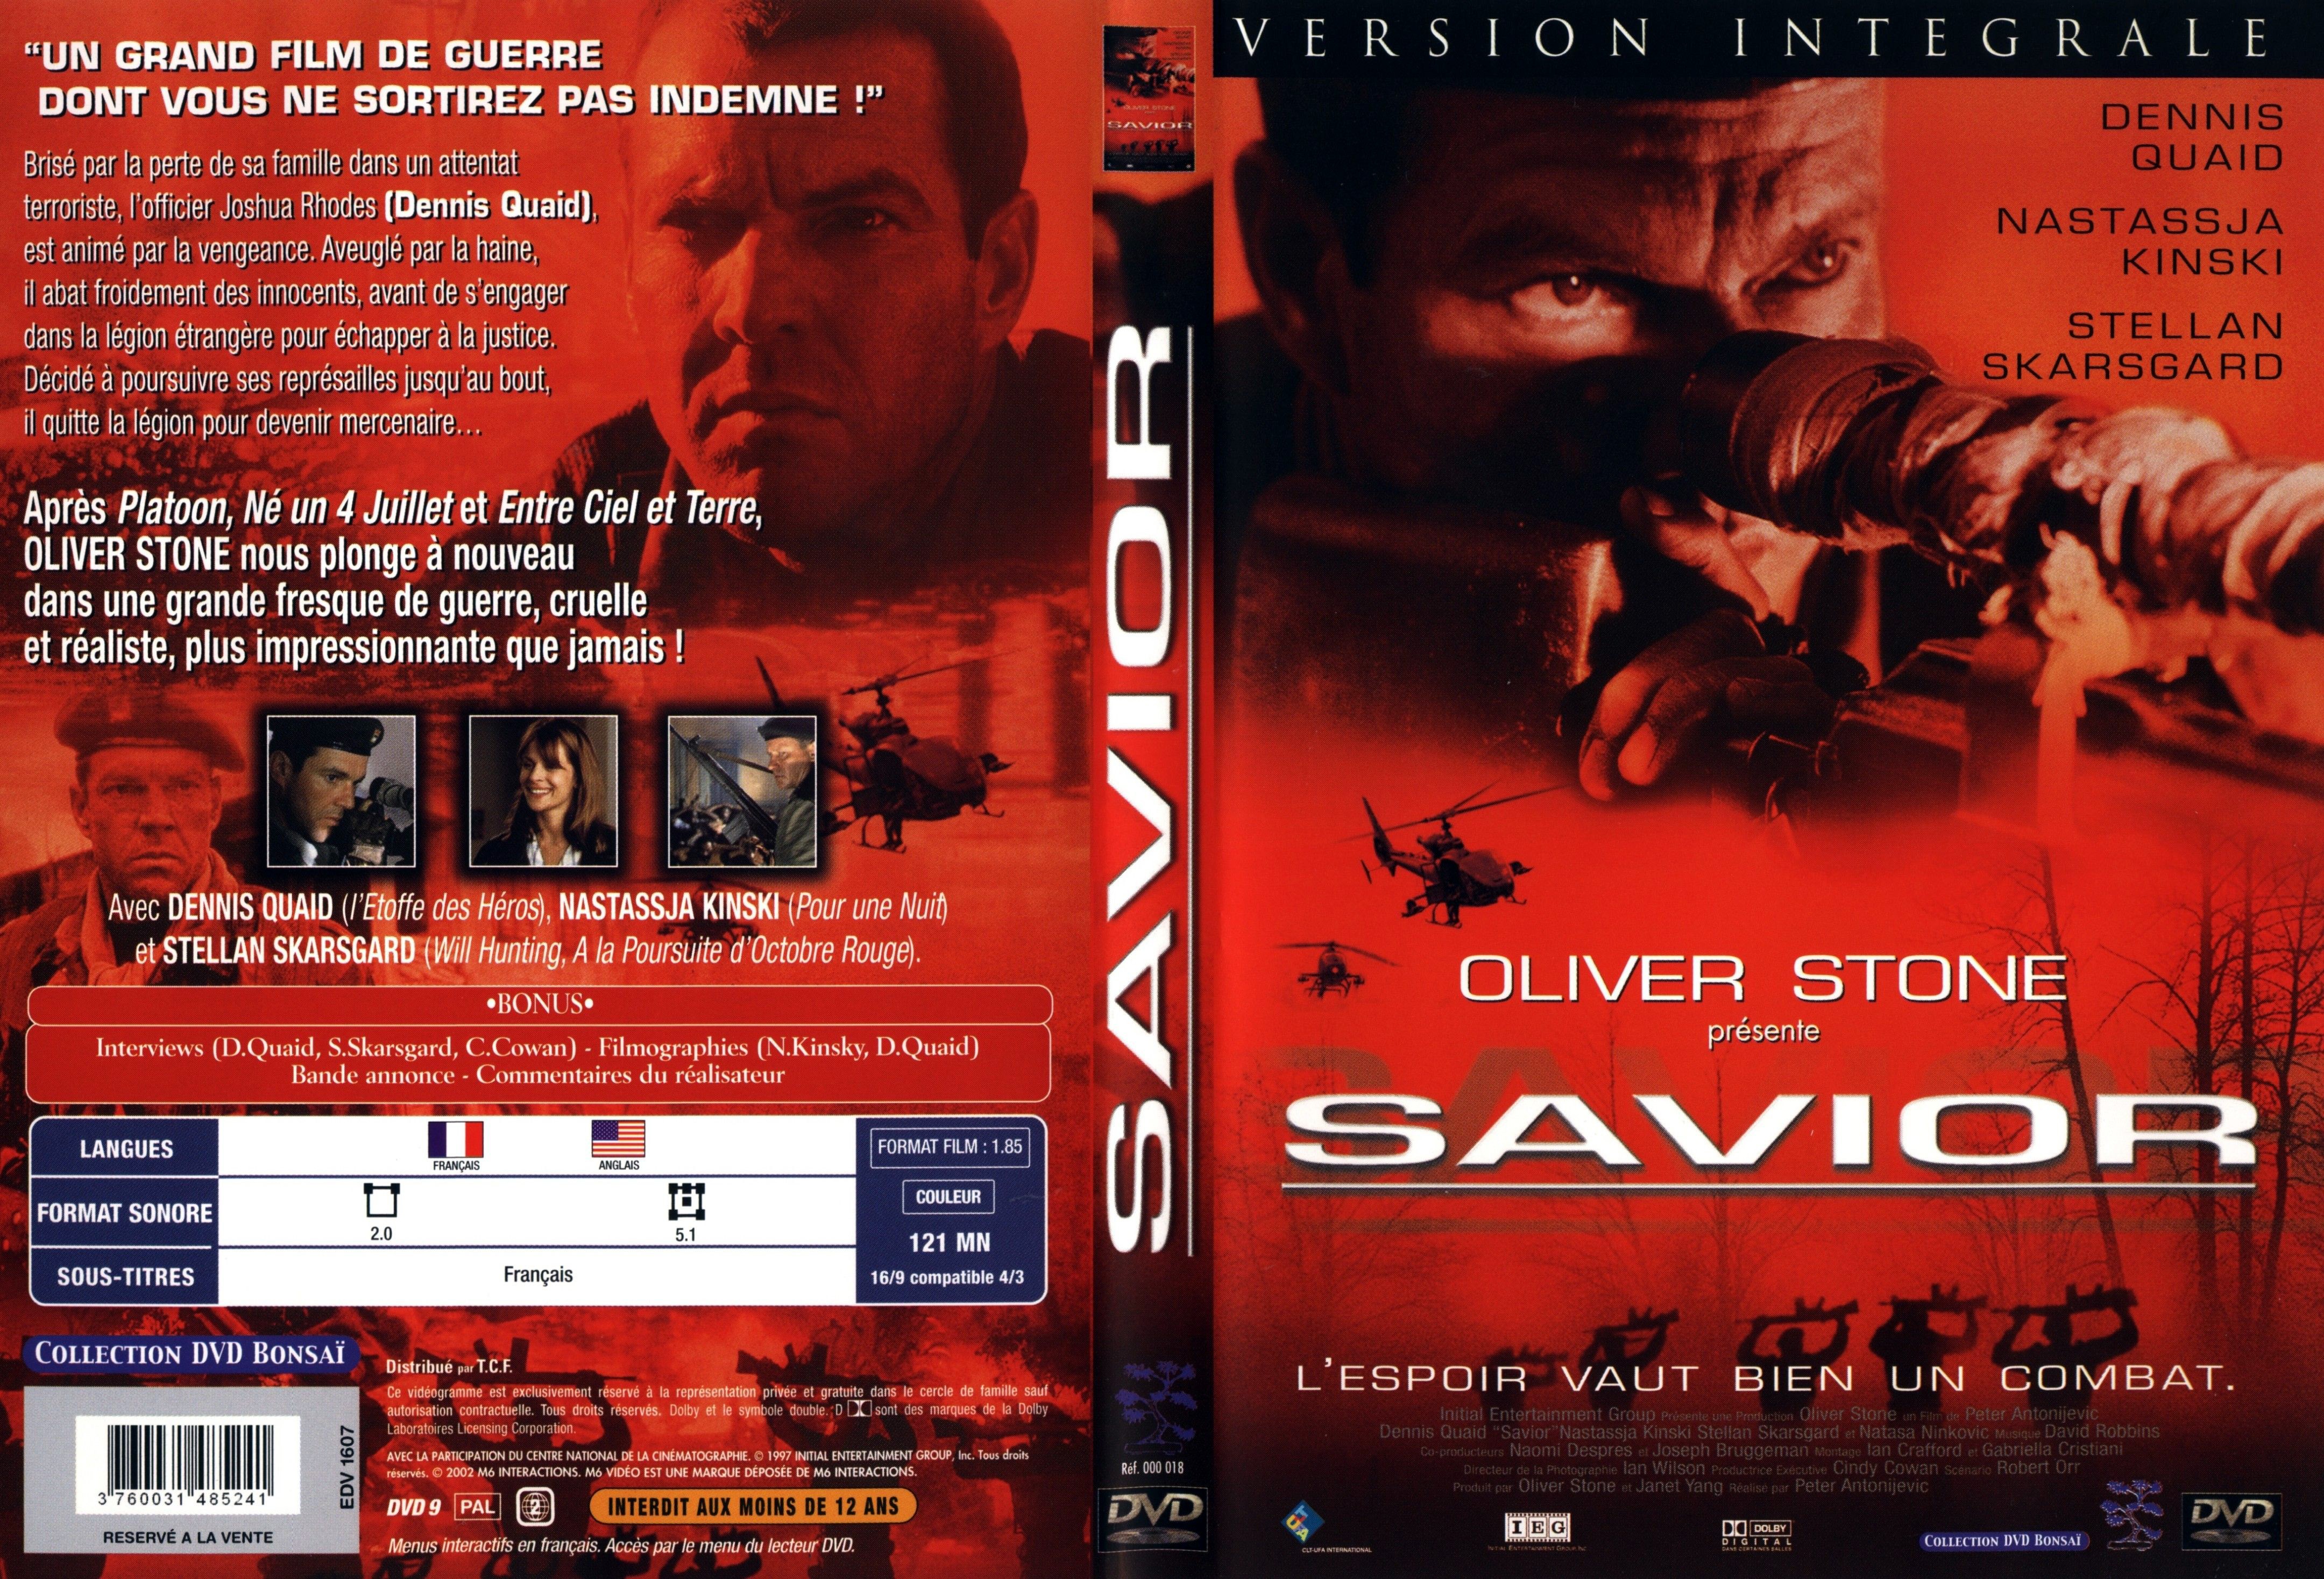 Jaquette DVD Savior